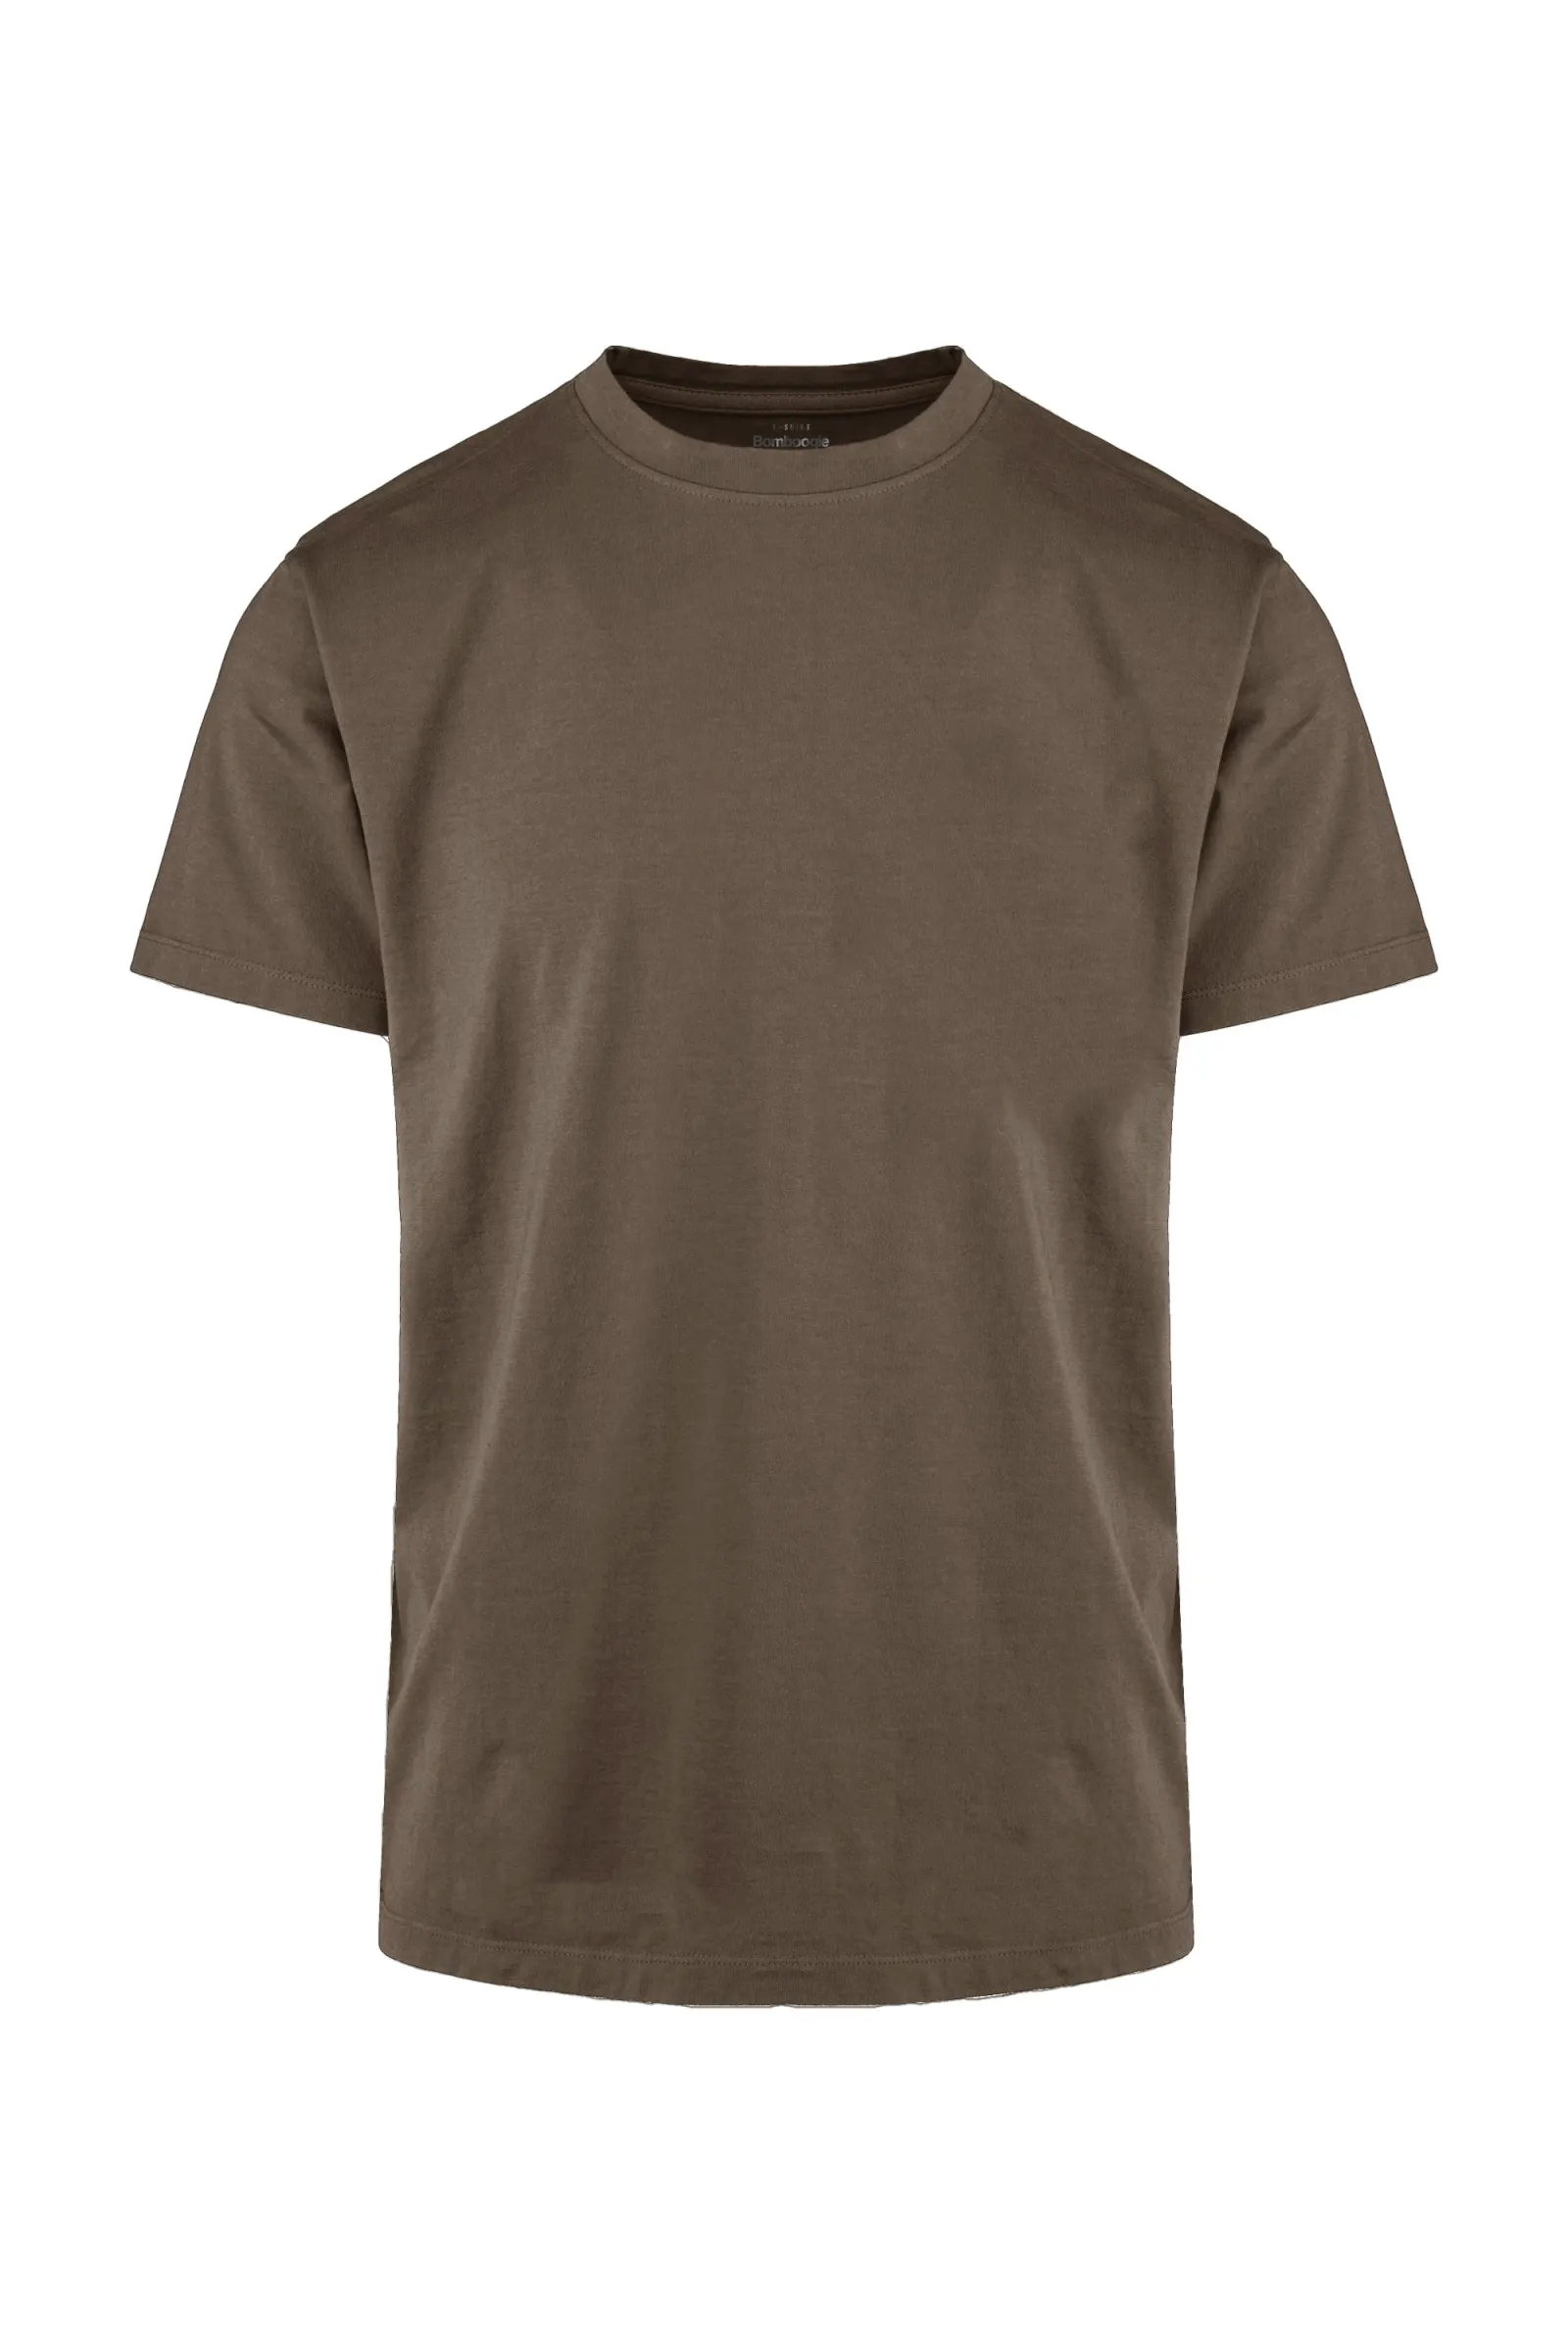 Bomboogie T-shirt girocollo da uomo in cotone fiammato TM7903TJSSG 189 bison